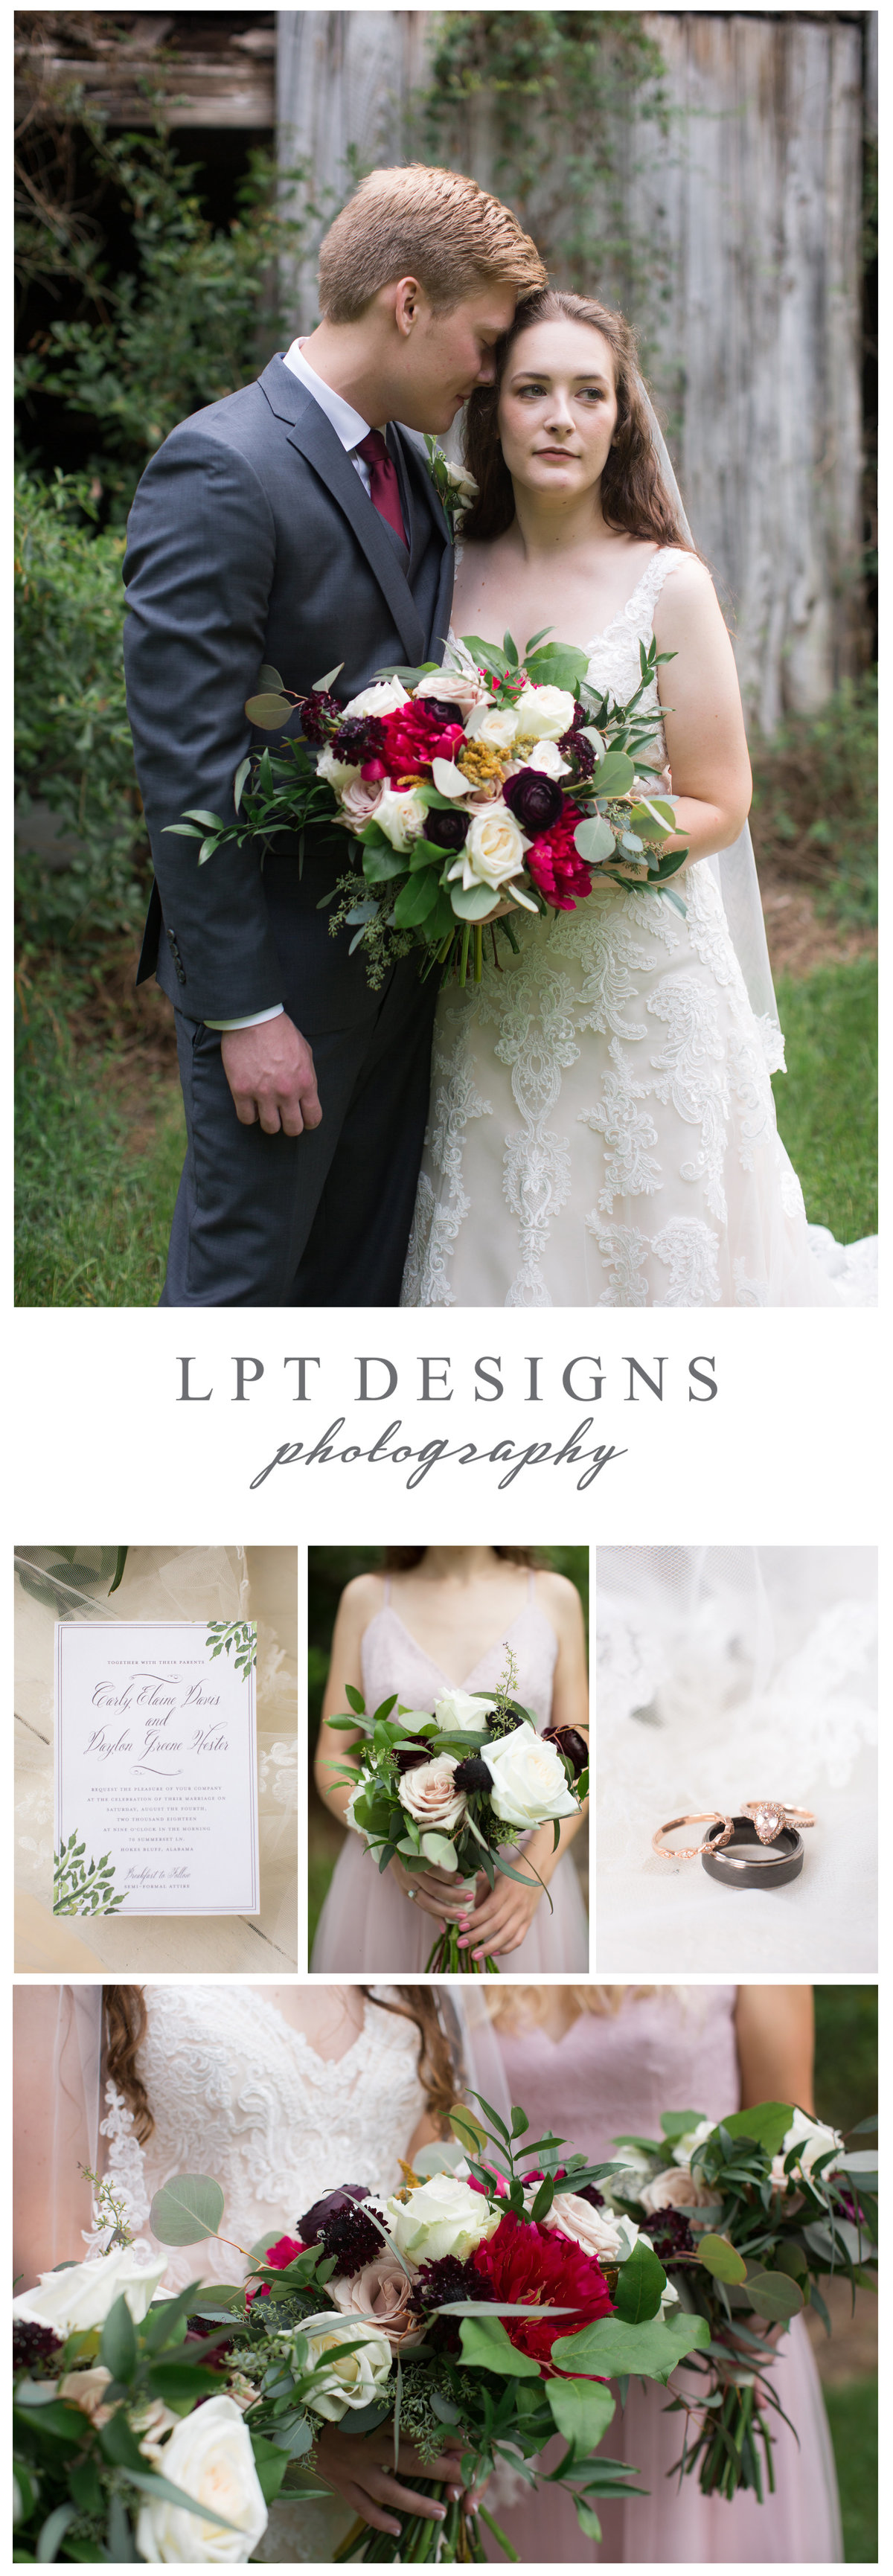 LPT Designs Photography Lydia Thrift Gadsden Alabama Fine Art Wedding Photographer CD 1